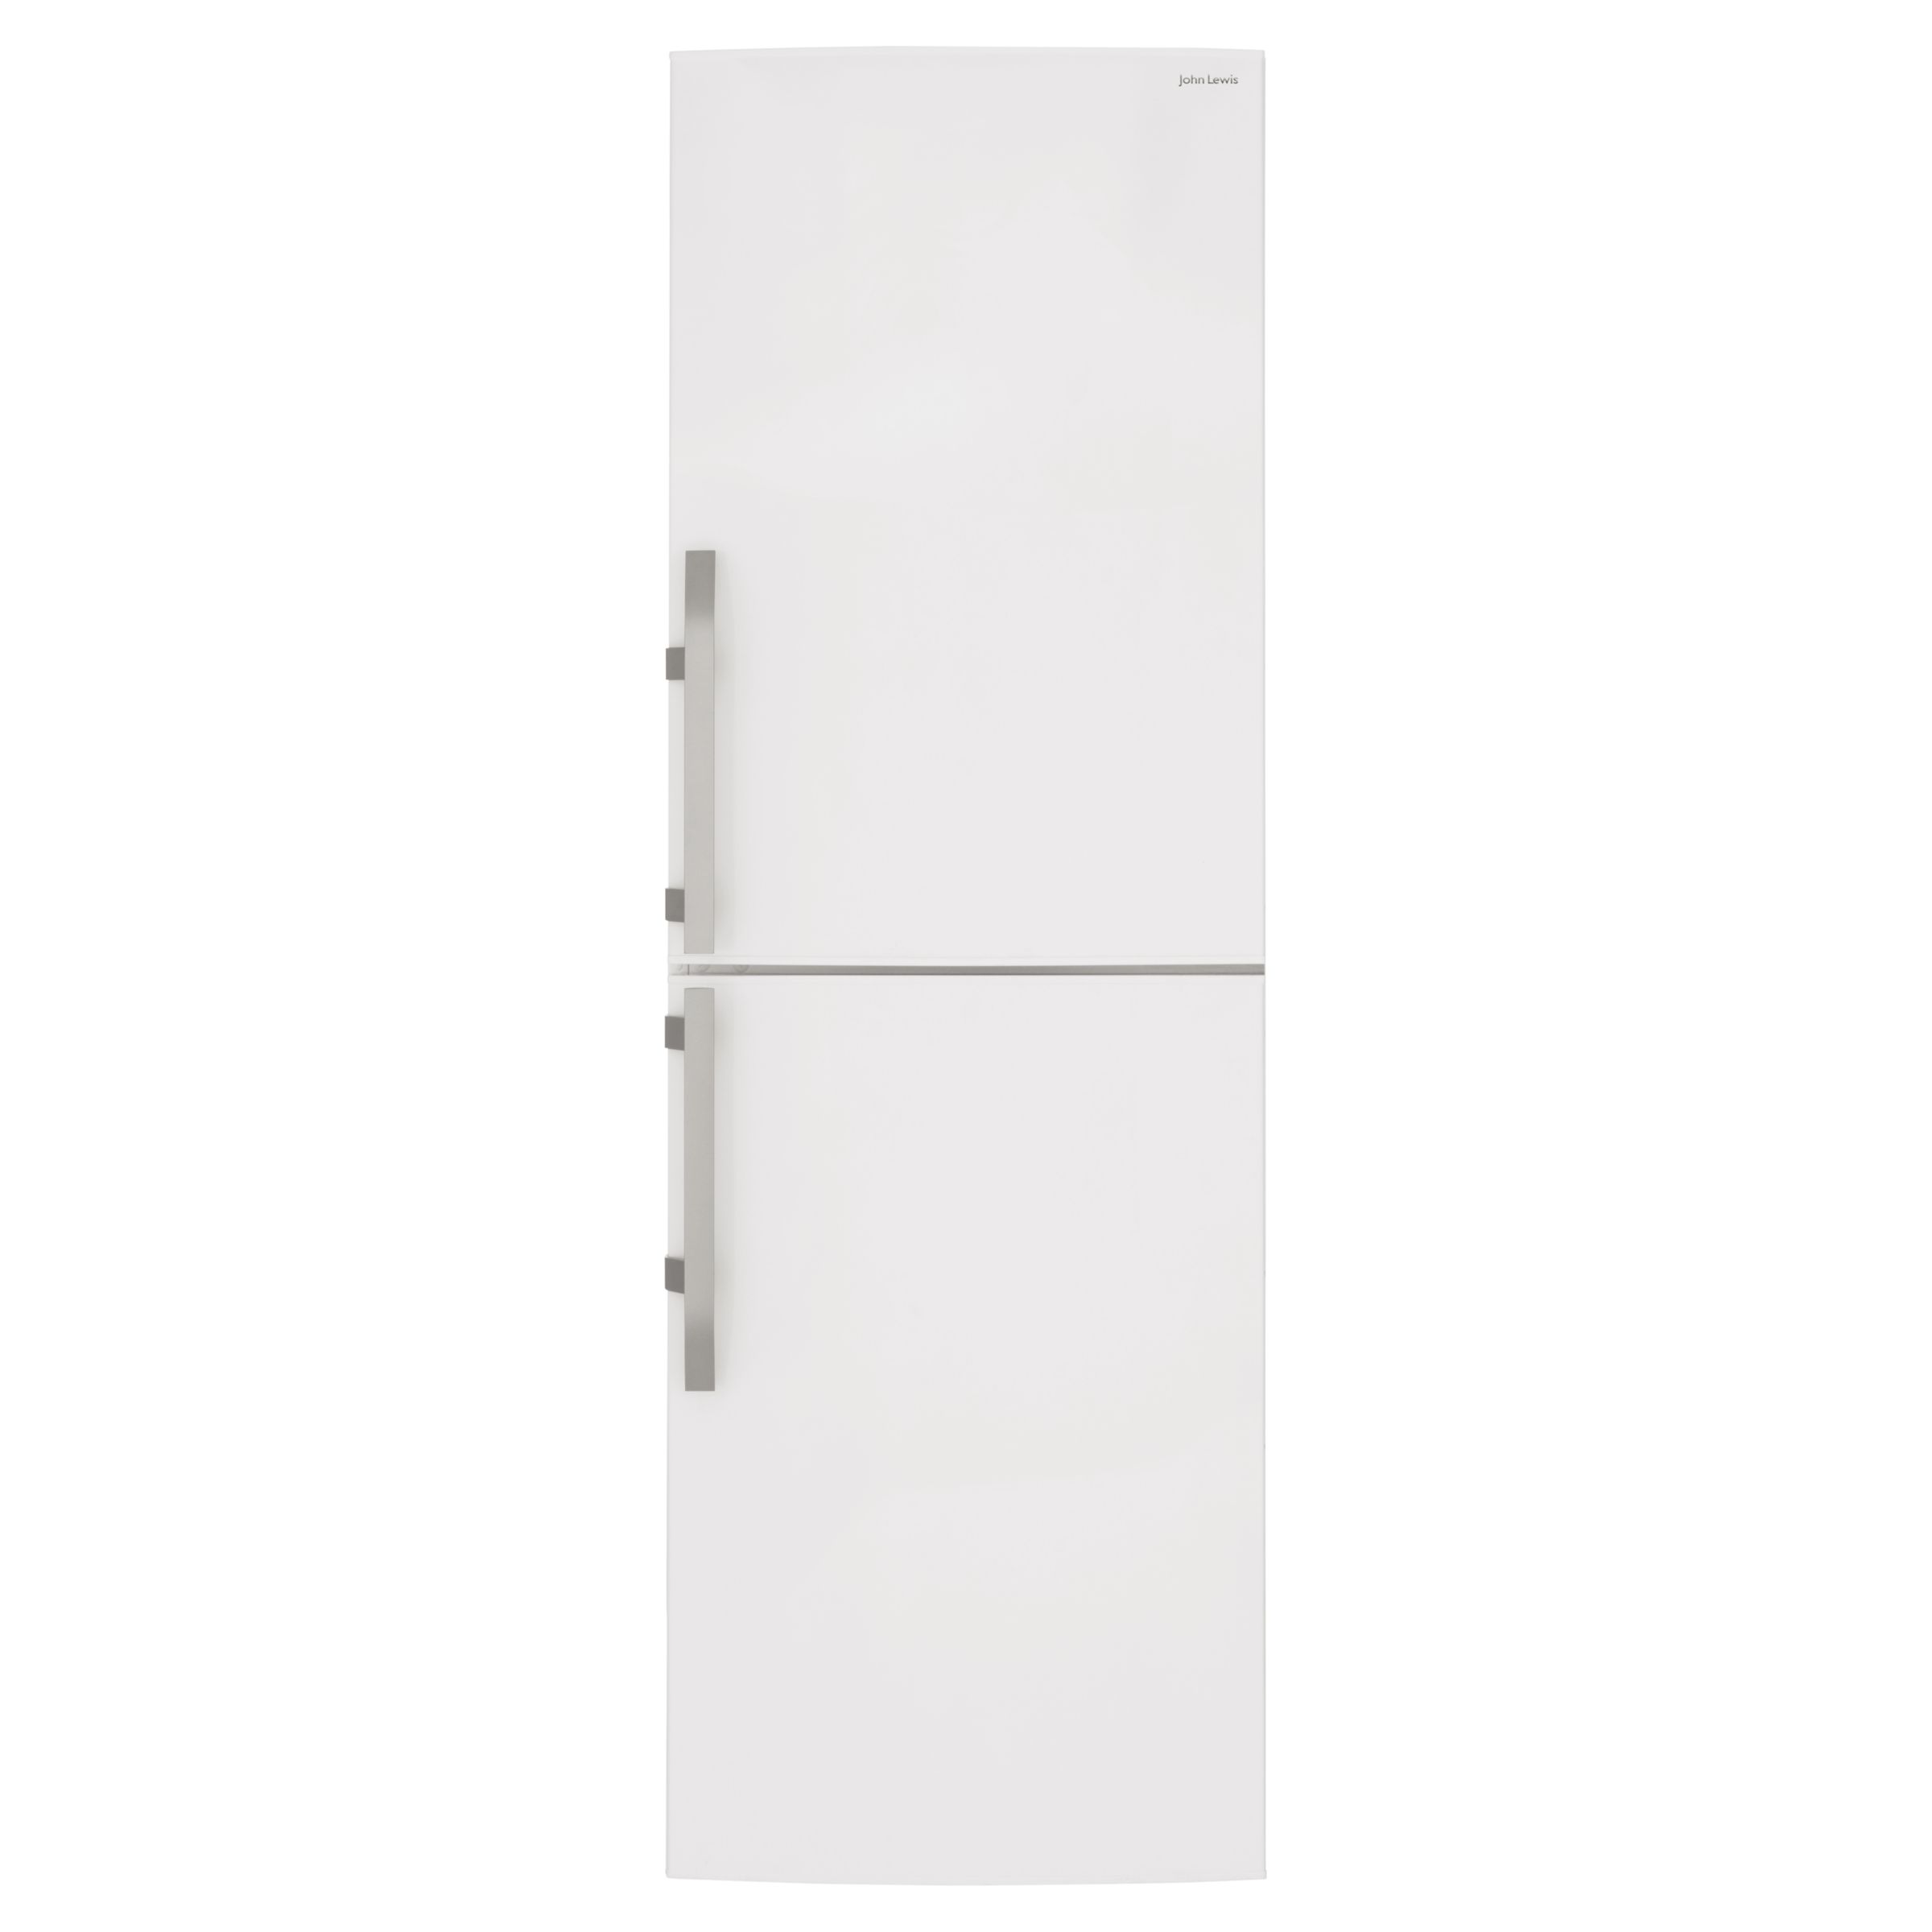 John Lewis JLFFW1818 Fridge Freezer, A+ Energy Rating, 60cm Wide in White